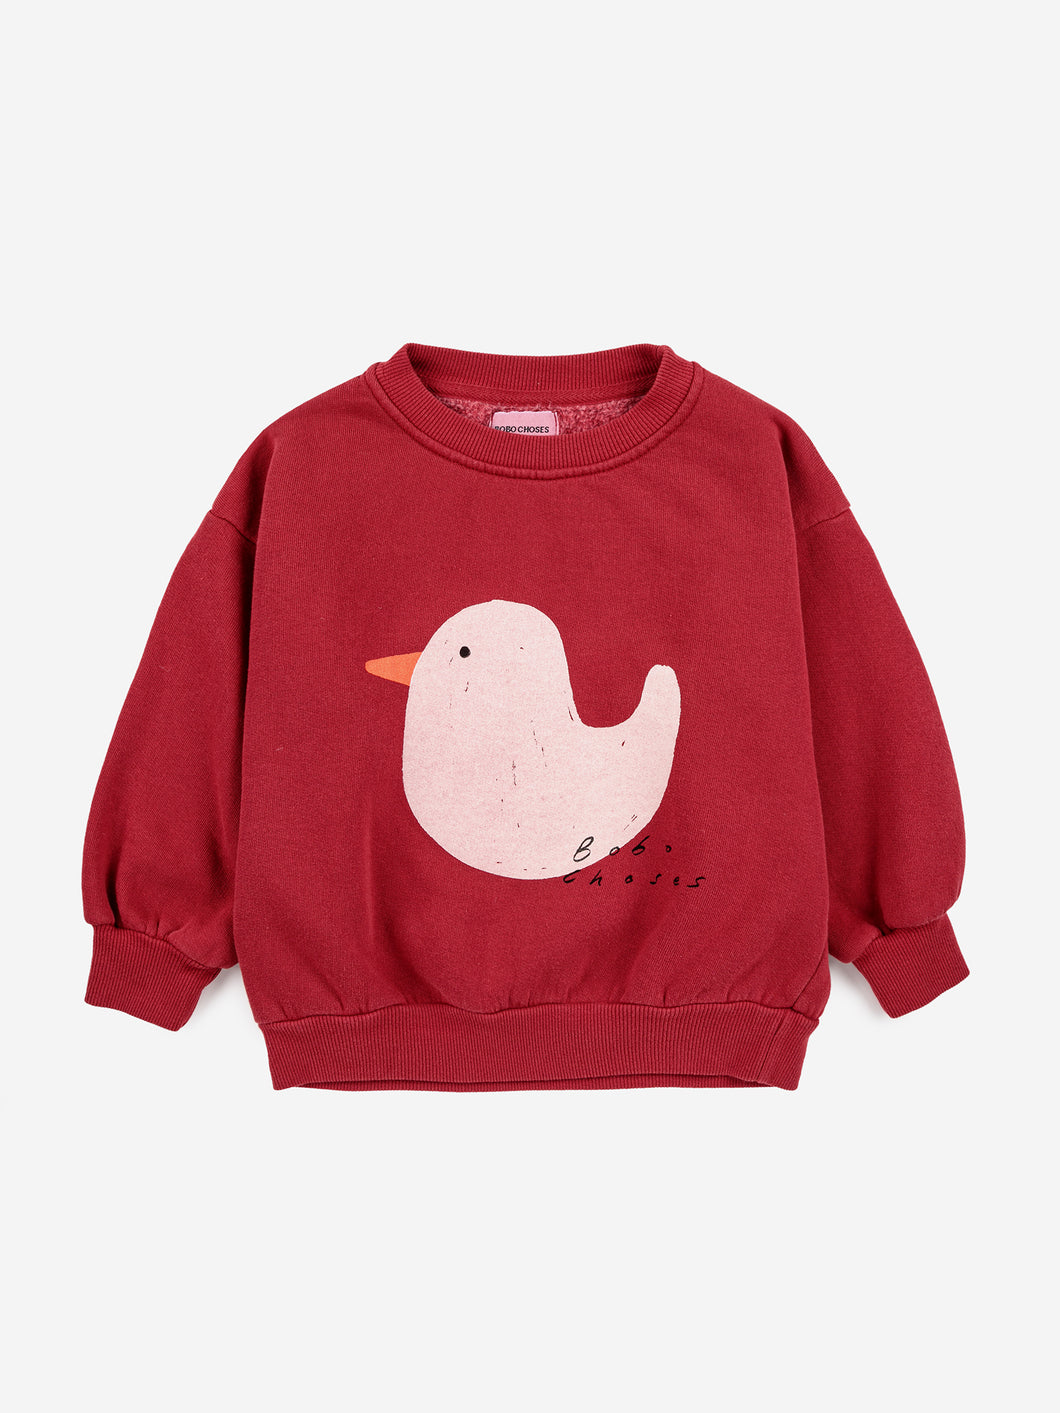 Bobo Choses Rubber Duck Sweatshirt Burgundy Red